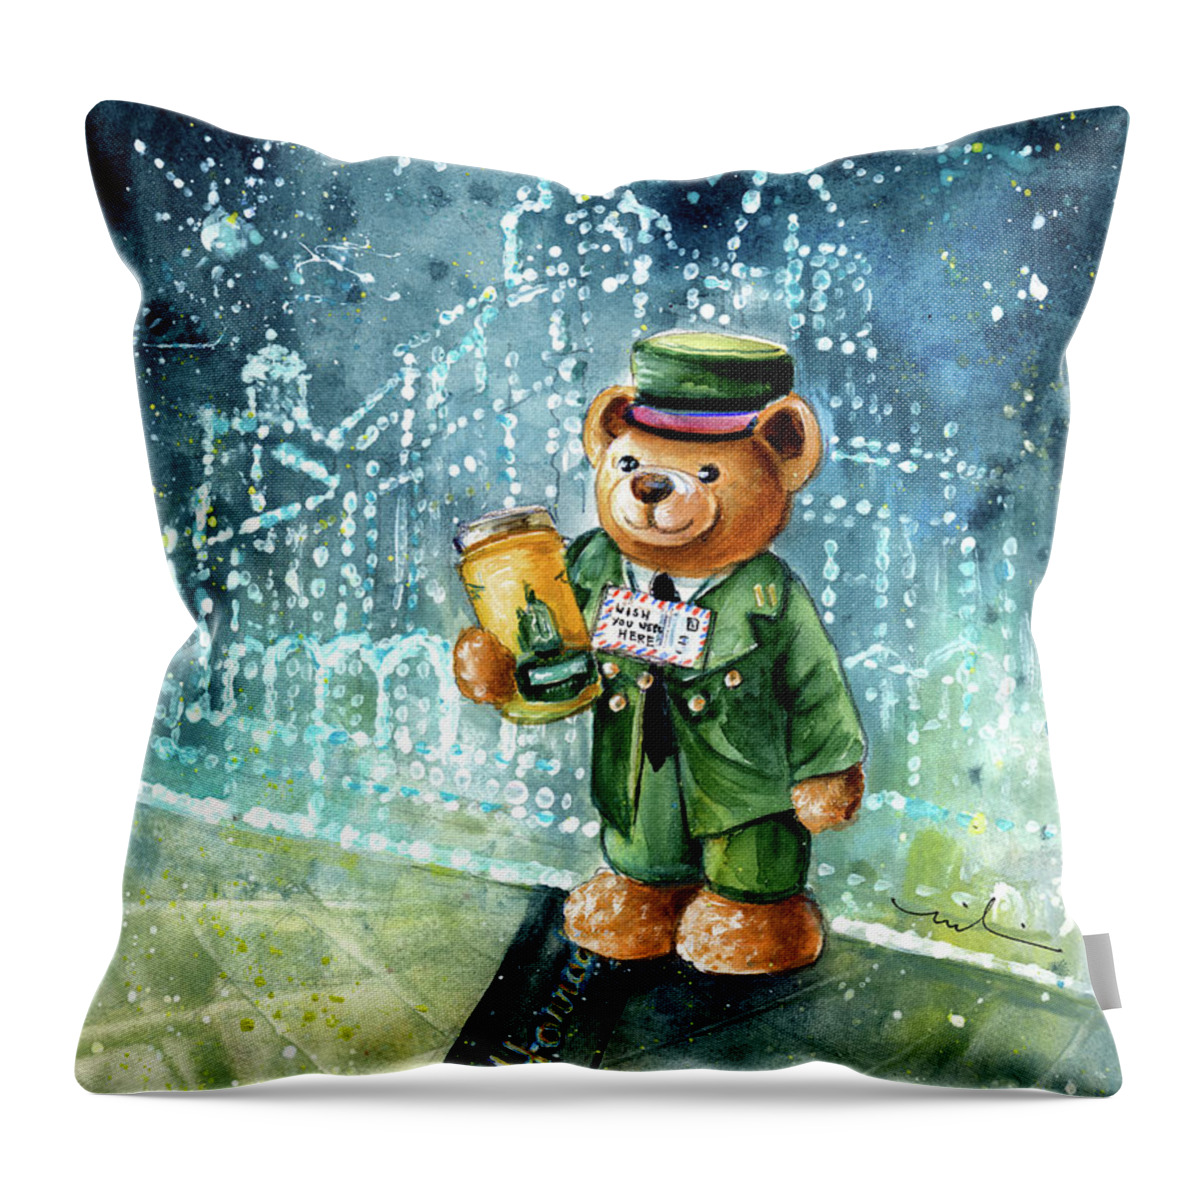 Truffle Mcfurry Throw Pillow featuring the painting Big Bear Harrods by Miki De Goodaboom